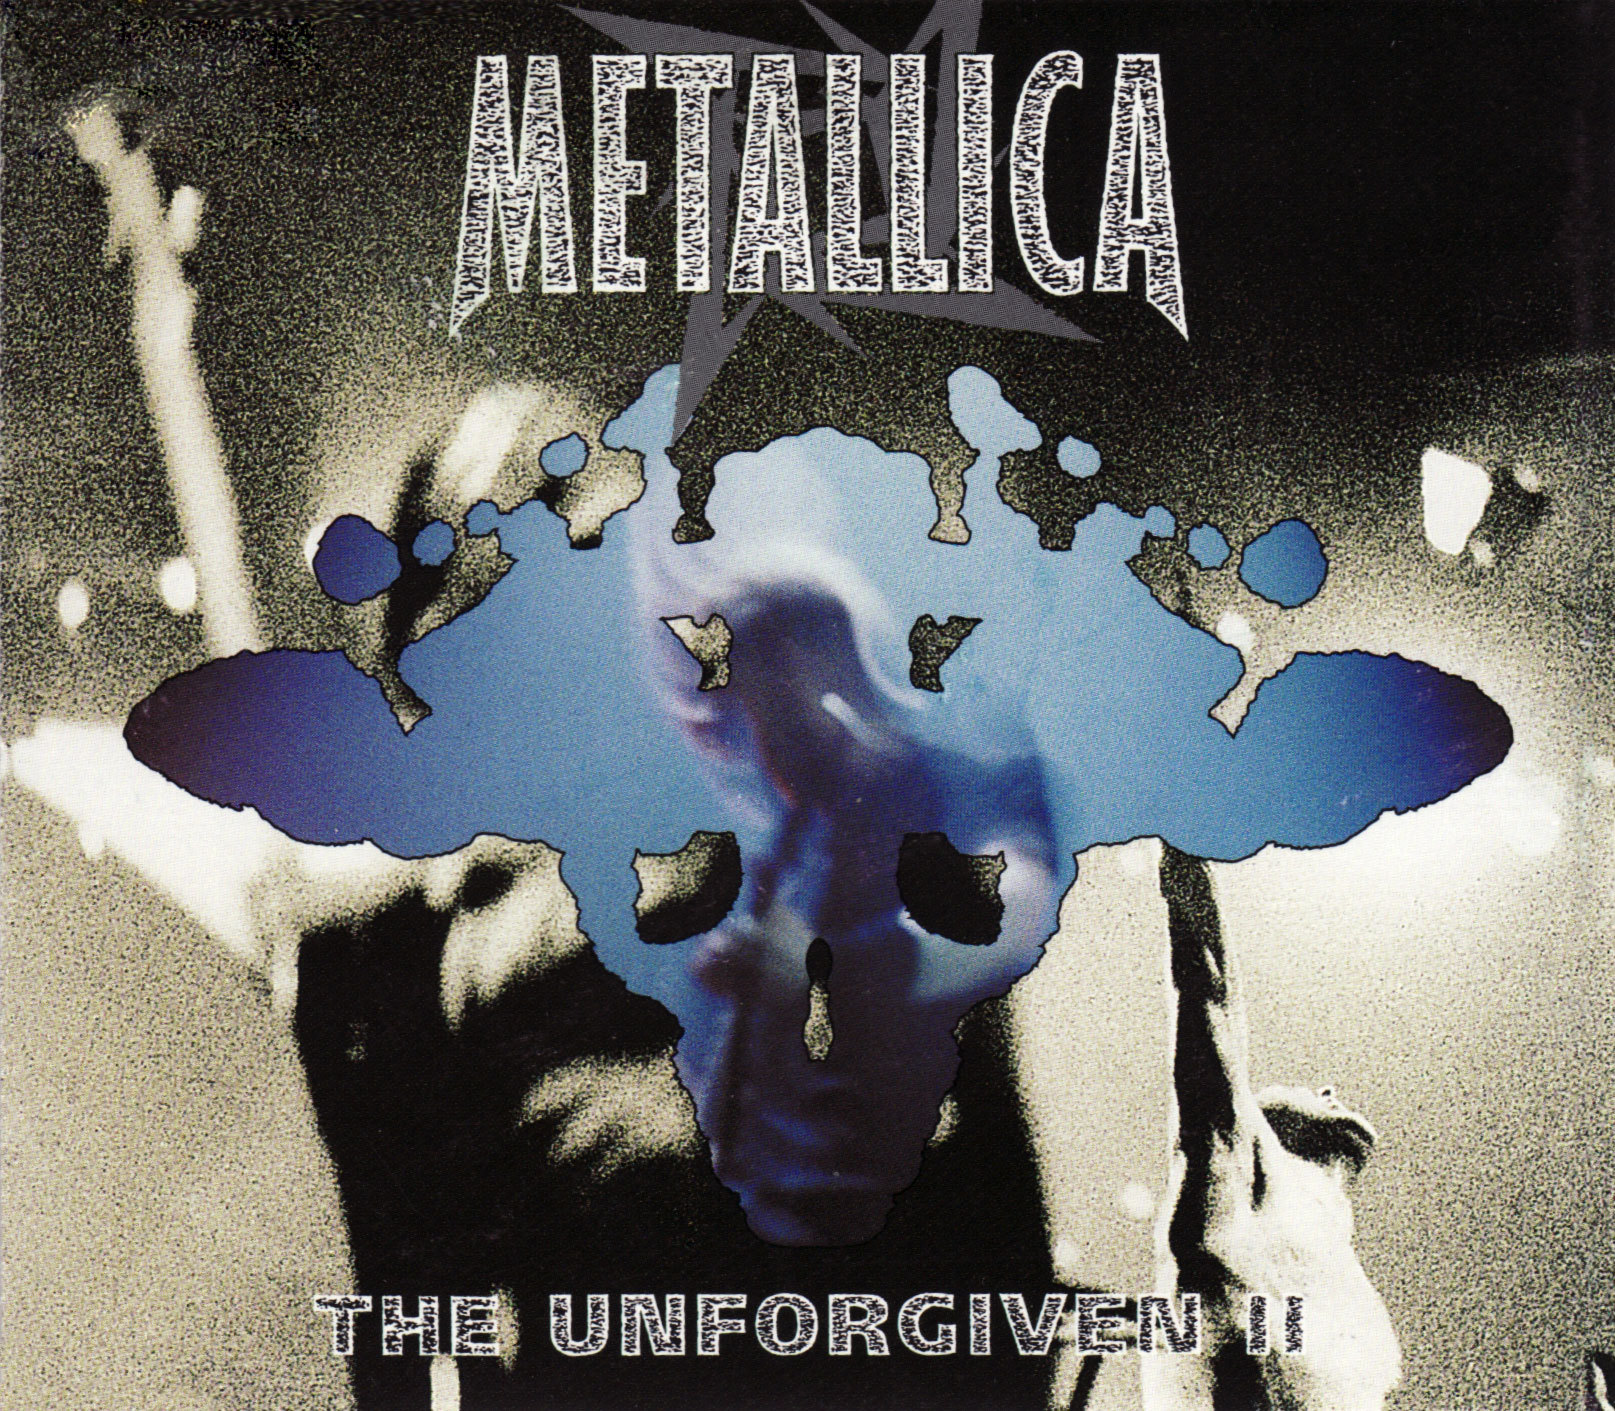 Metallica - The Unforgiven single